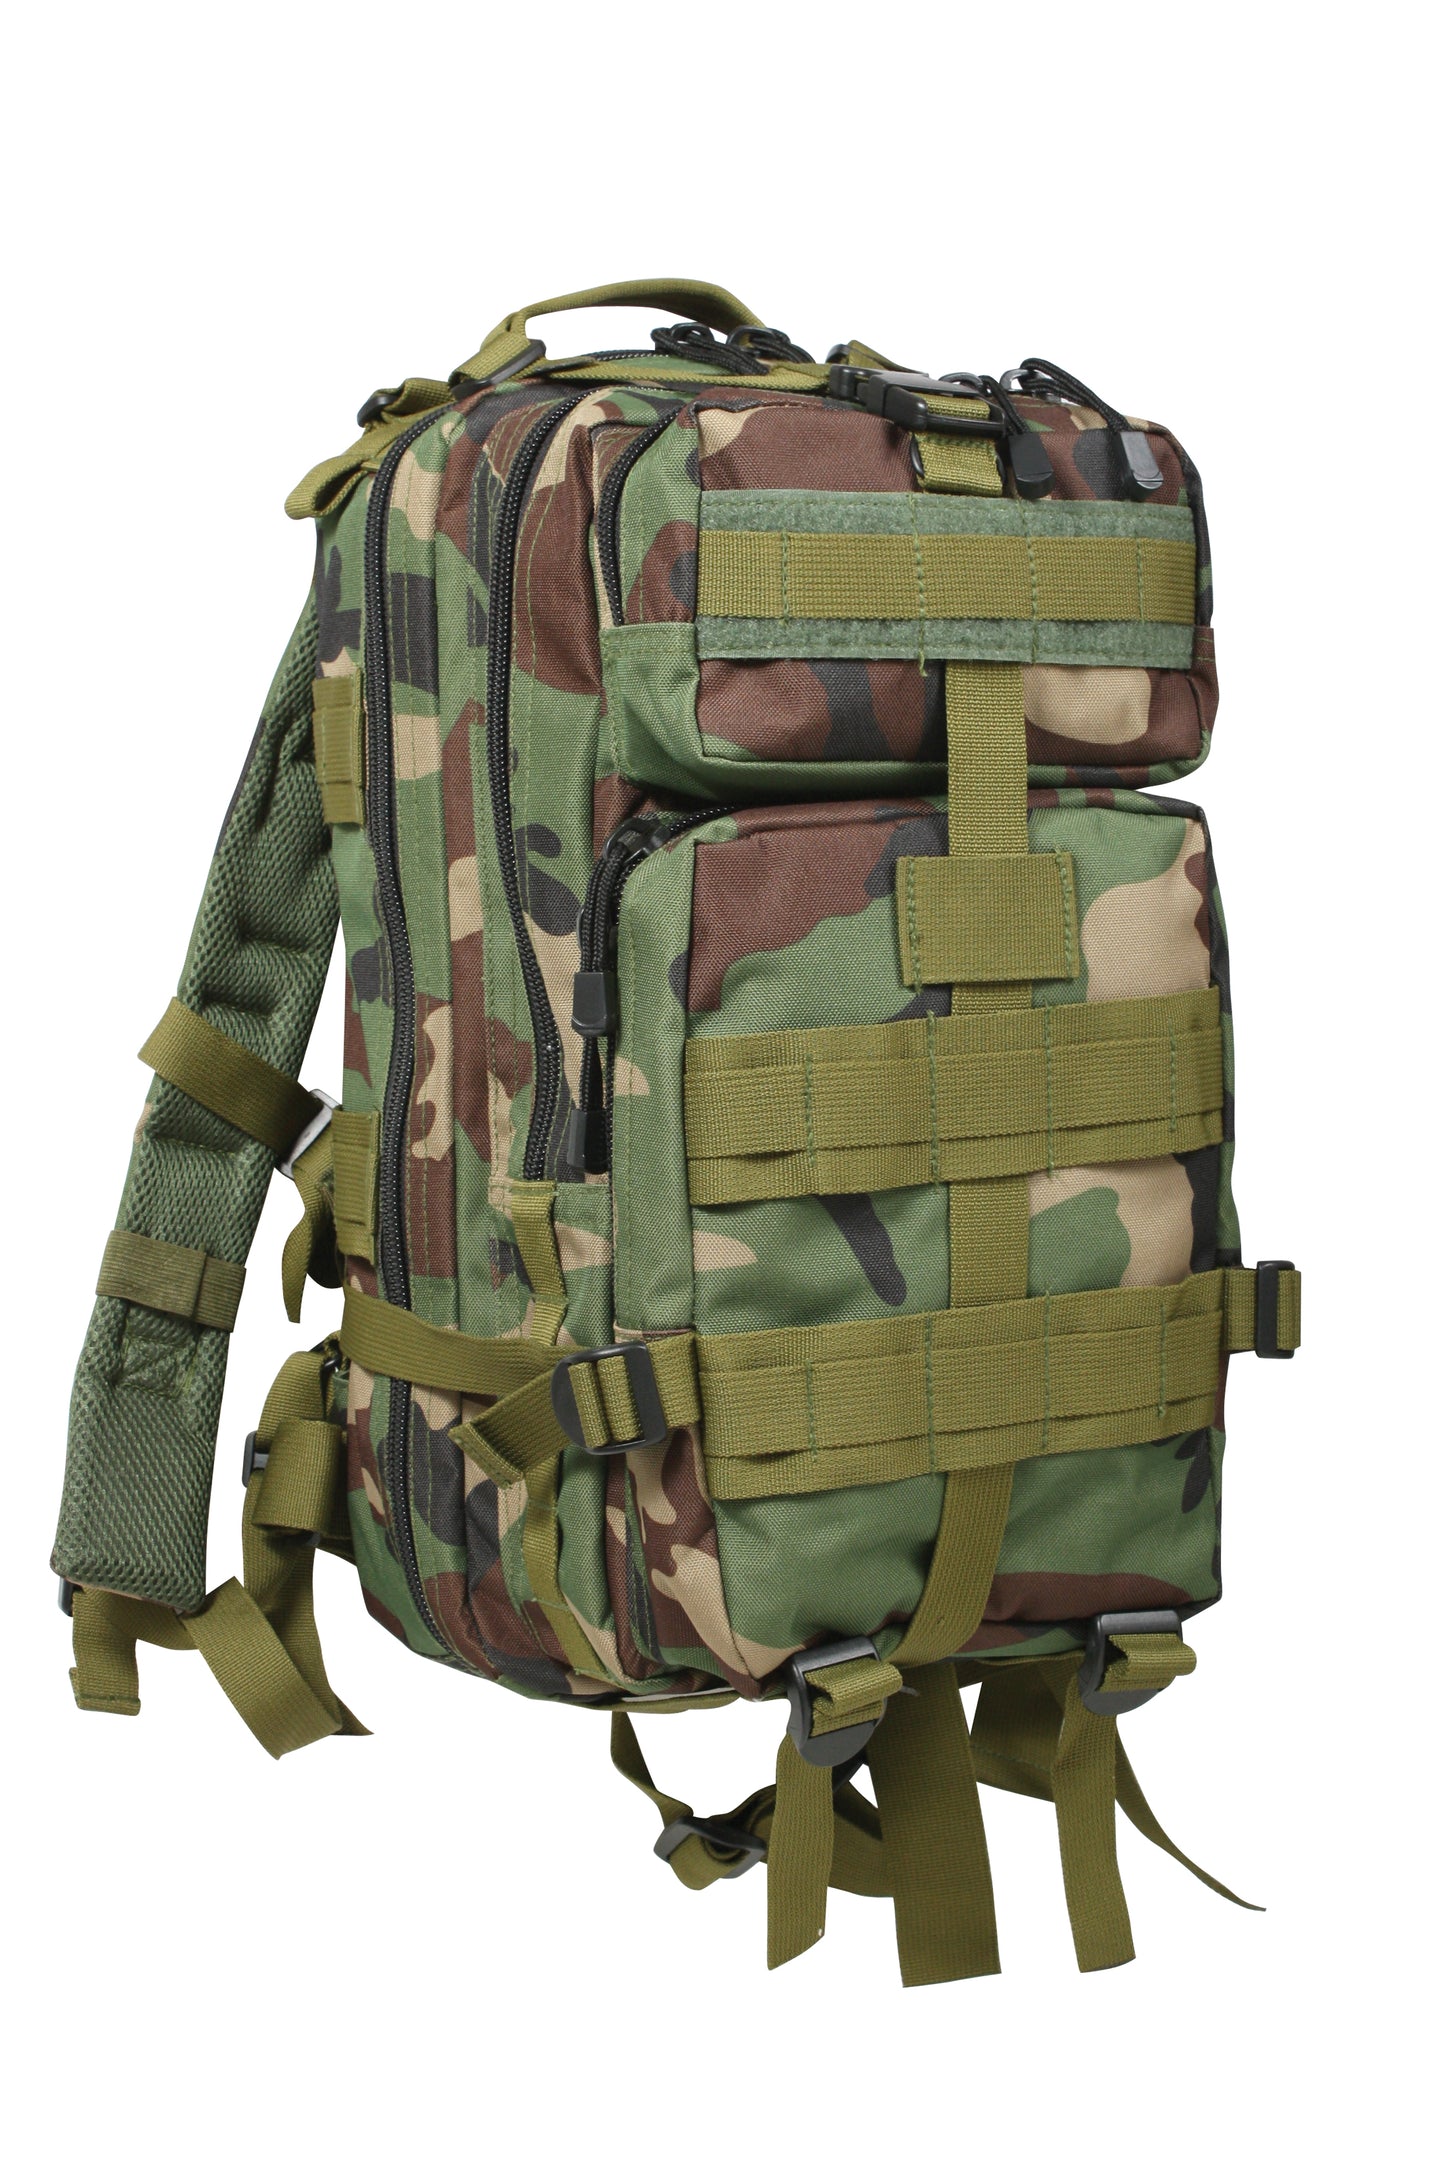 Milspec Camo Medium Transport Pack Gifts For Him MilTac Tactical Military Outdoor Gear Australia